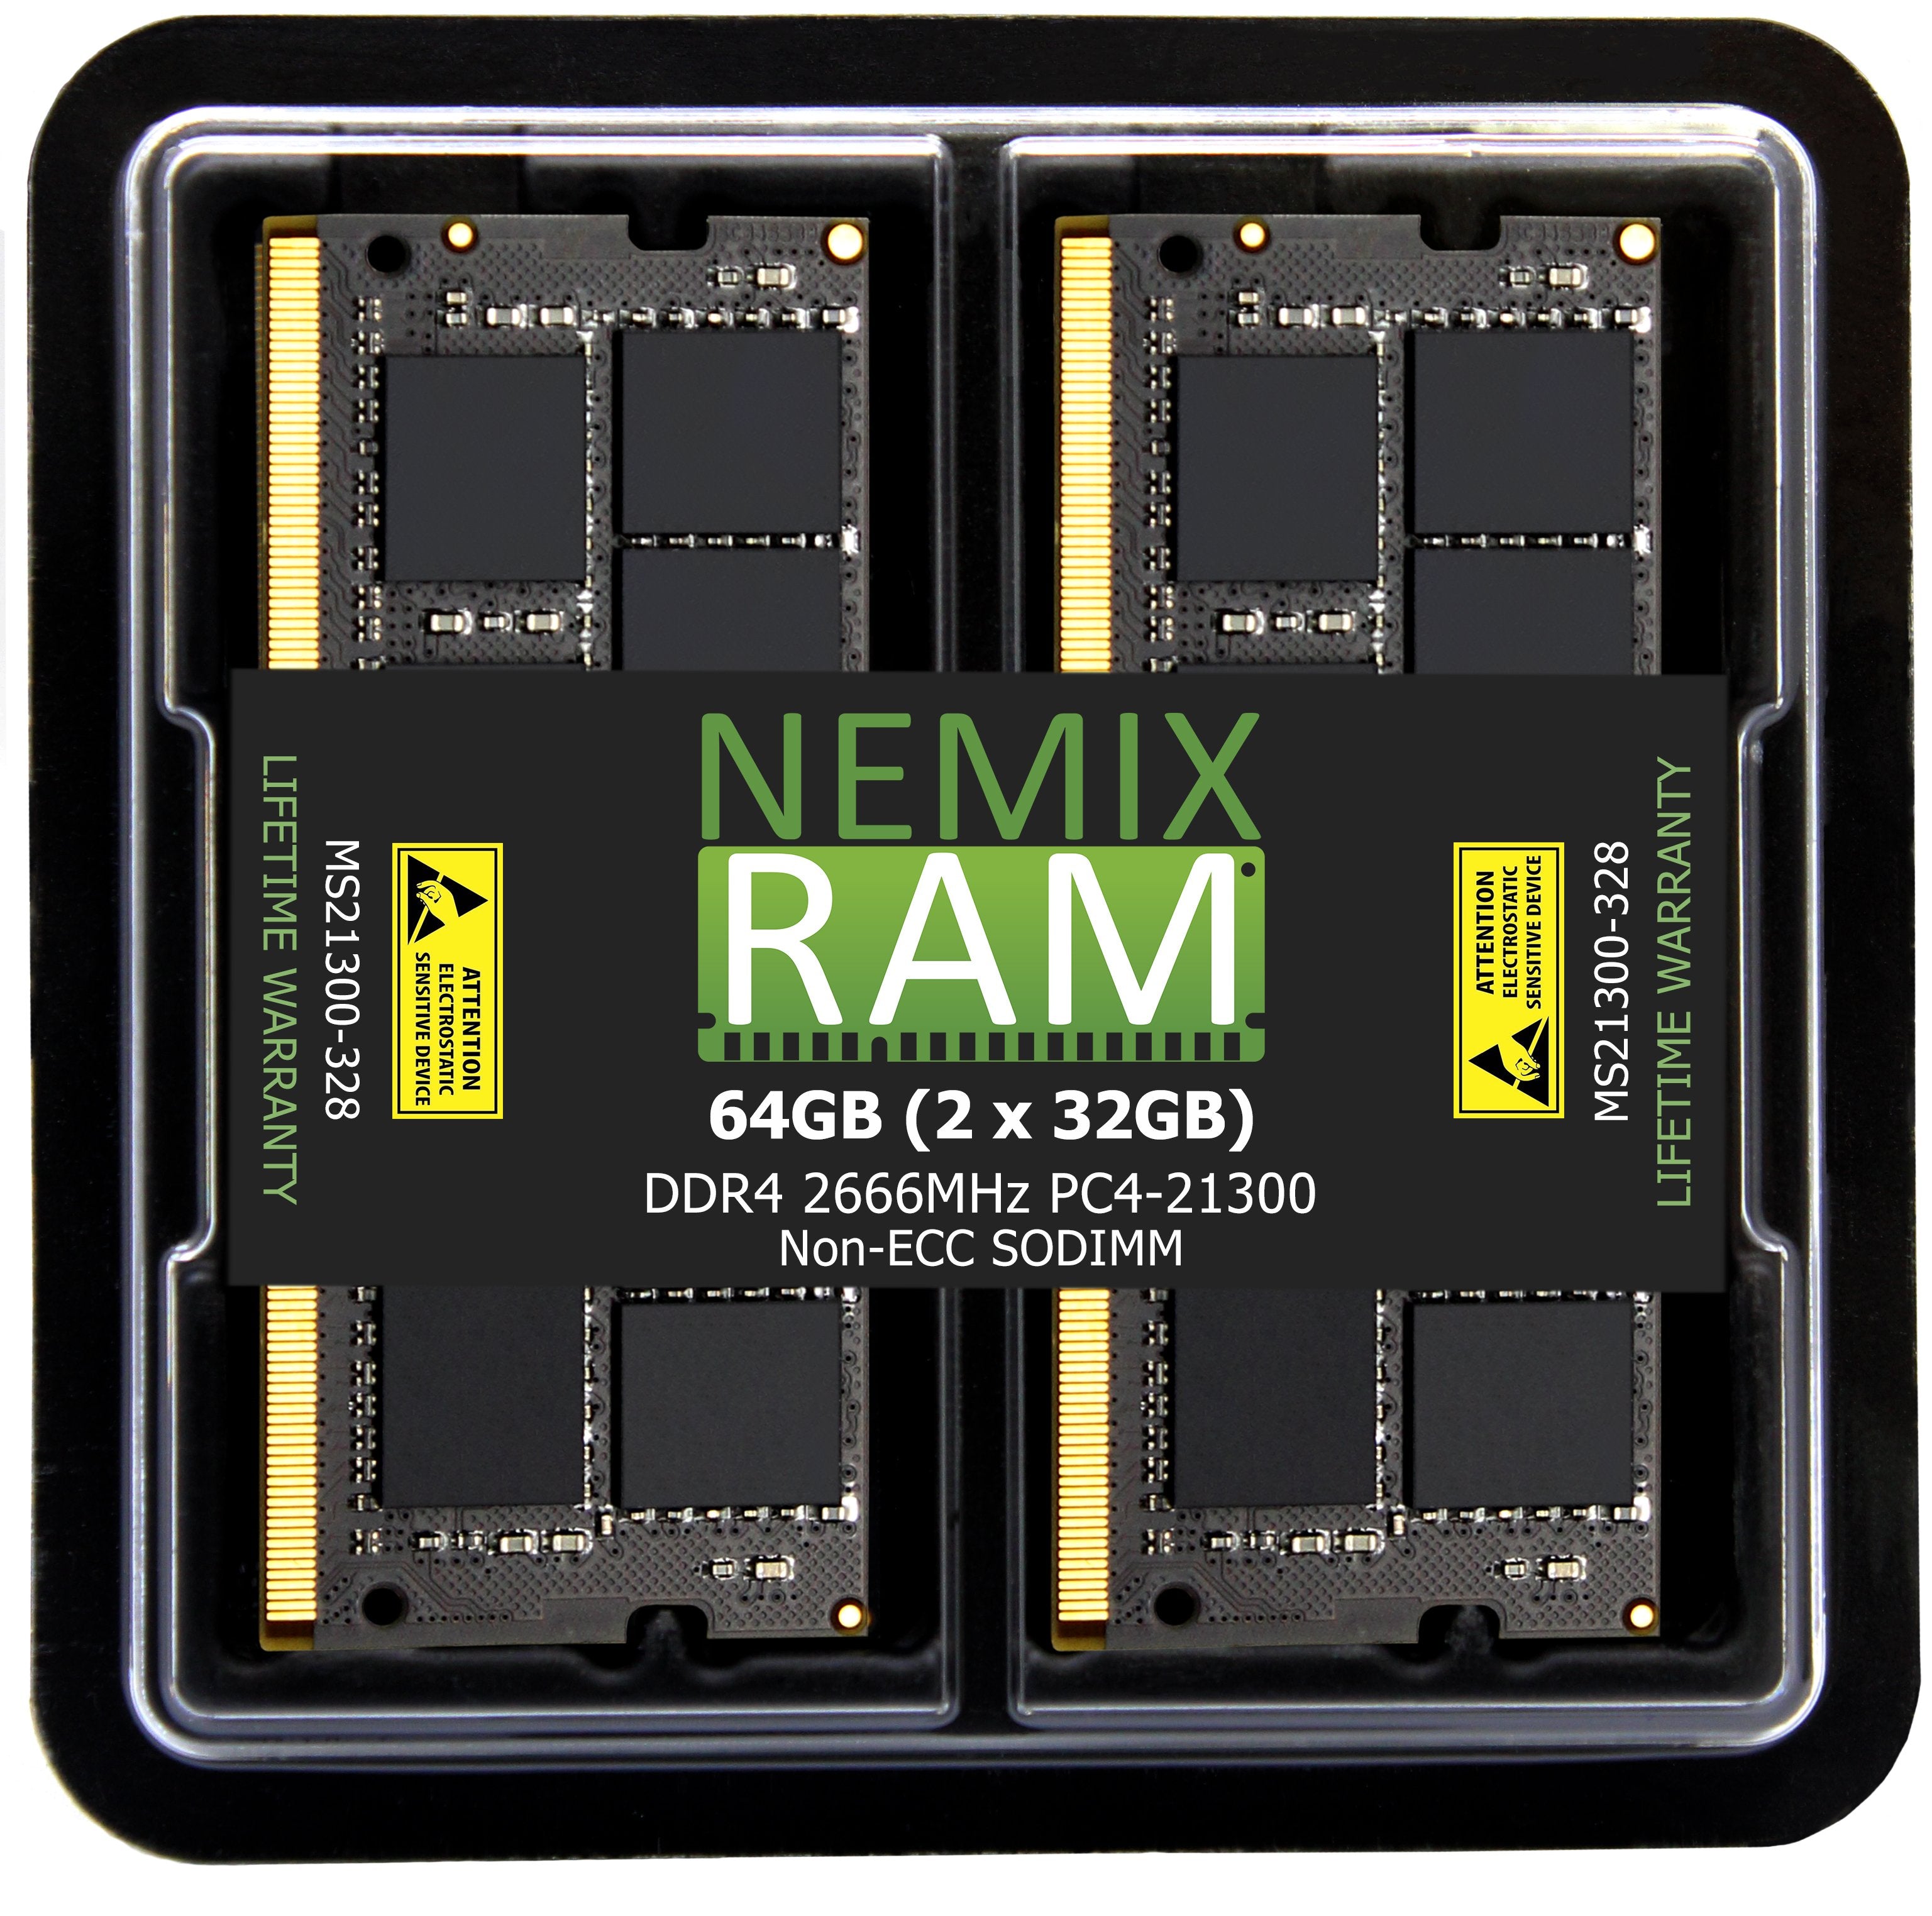 NEMIX RAM Memory Upgrade equivalent to ASUSTOR AS-32GD4 92M11-S32D40 SODIMM Memory Module